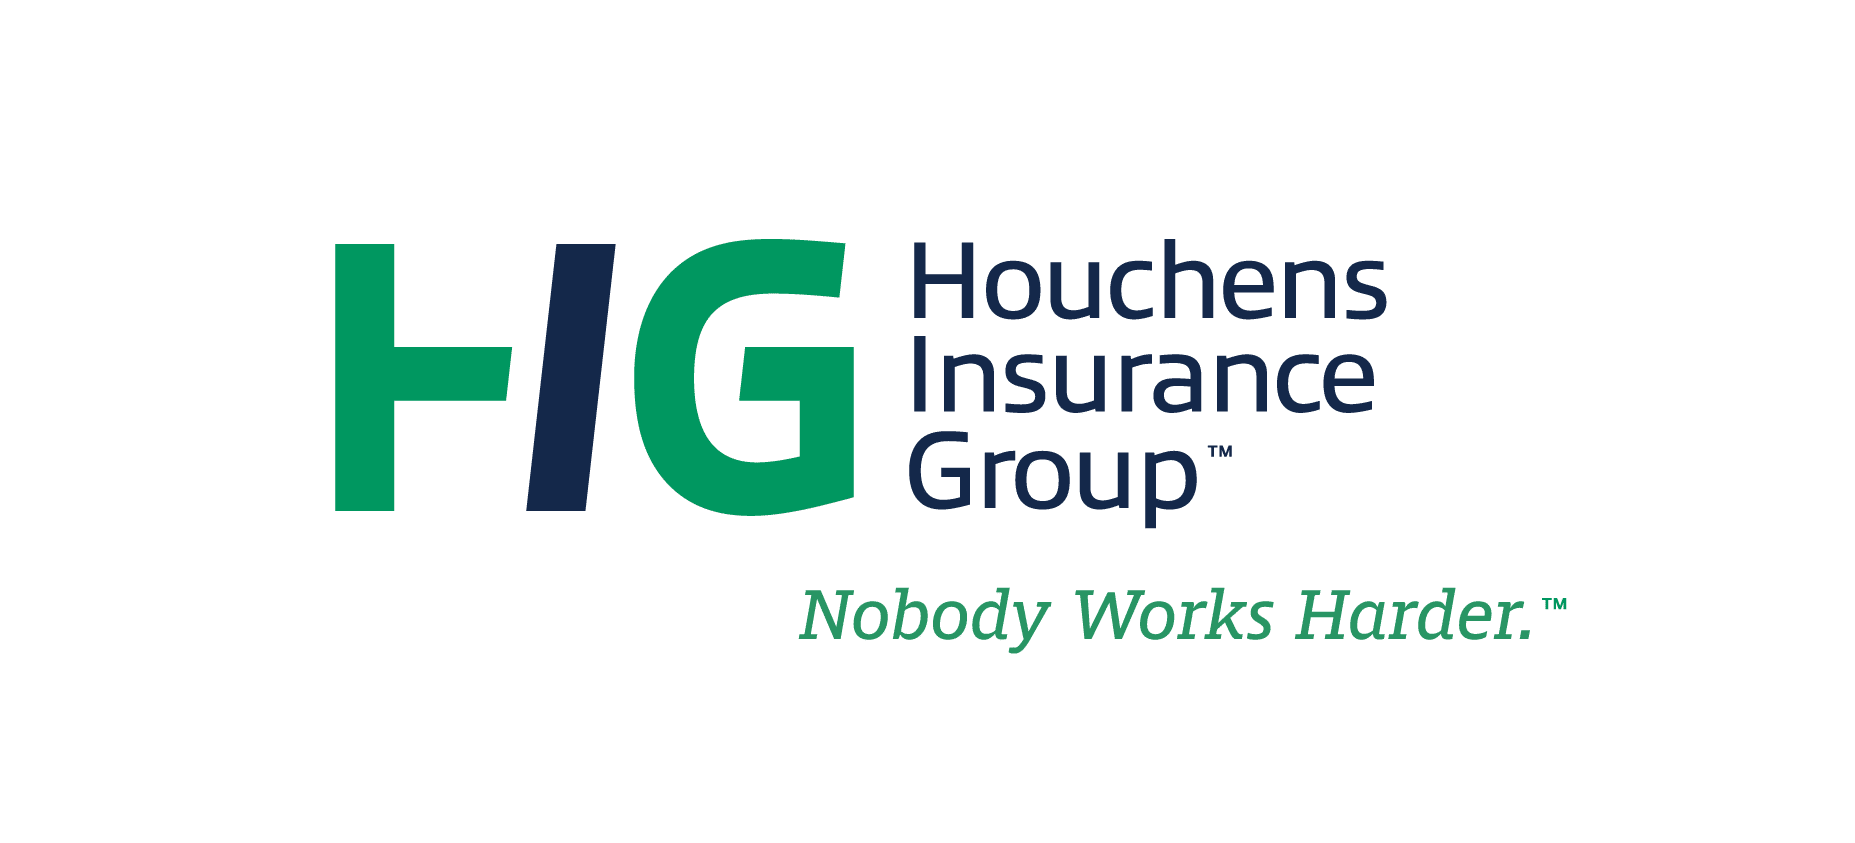 Houchens Insurance Group logo, ImageQuest, Nobody works harder